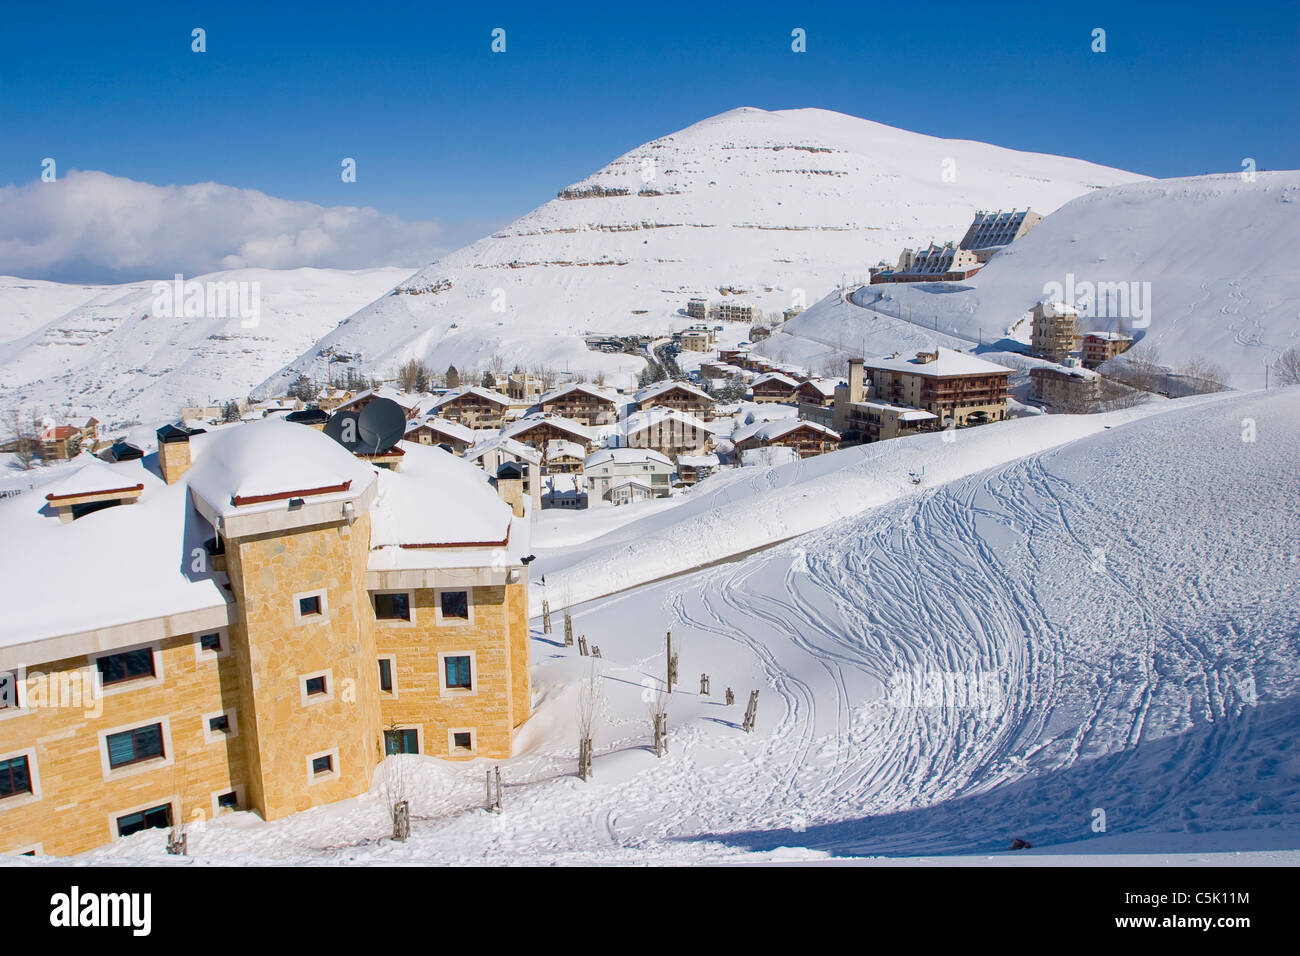 Snow covered ski resort, Mzaar, Faraya, Lebanon Stock Photo